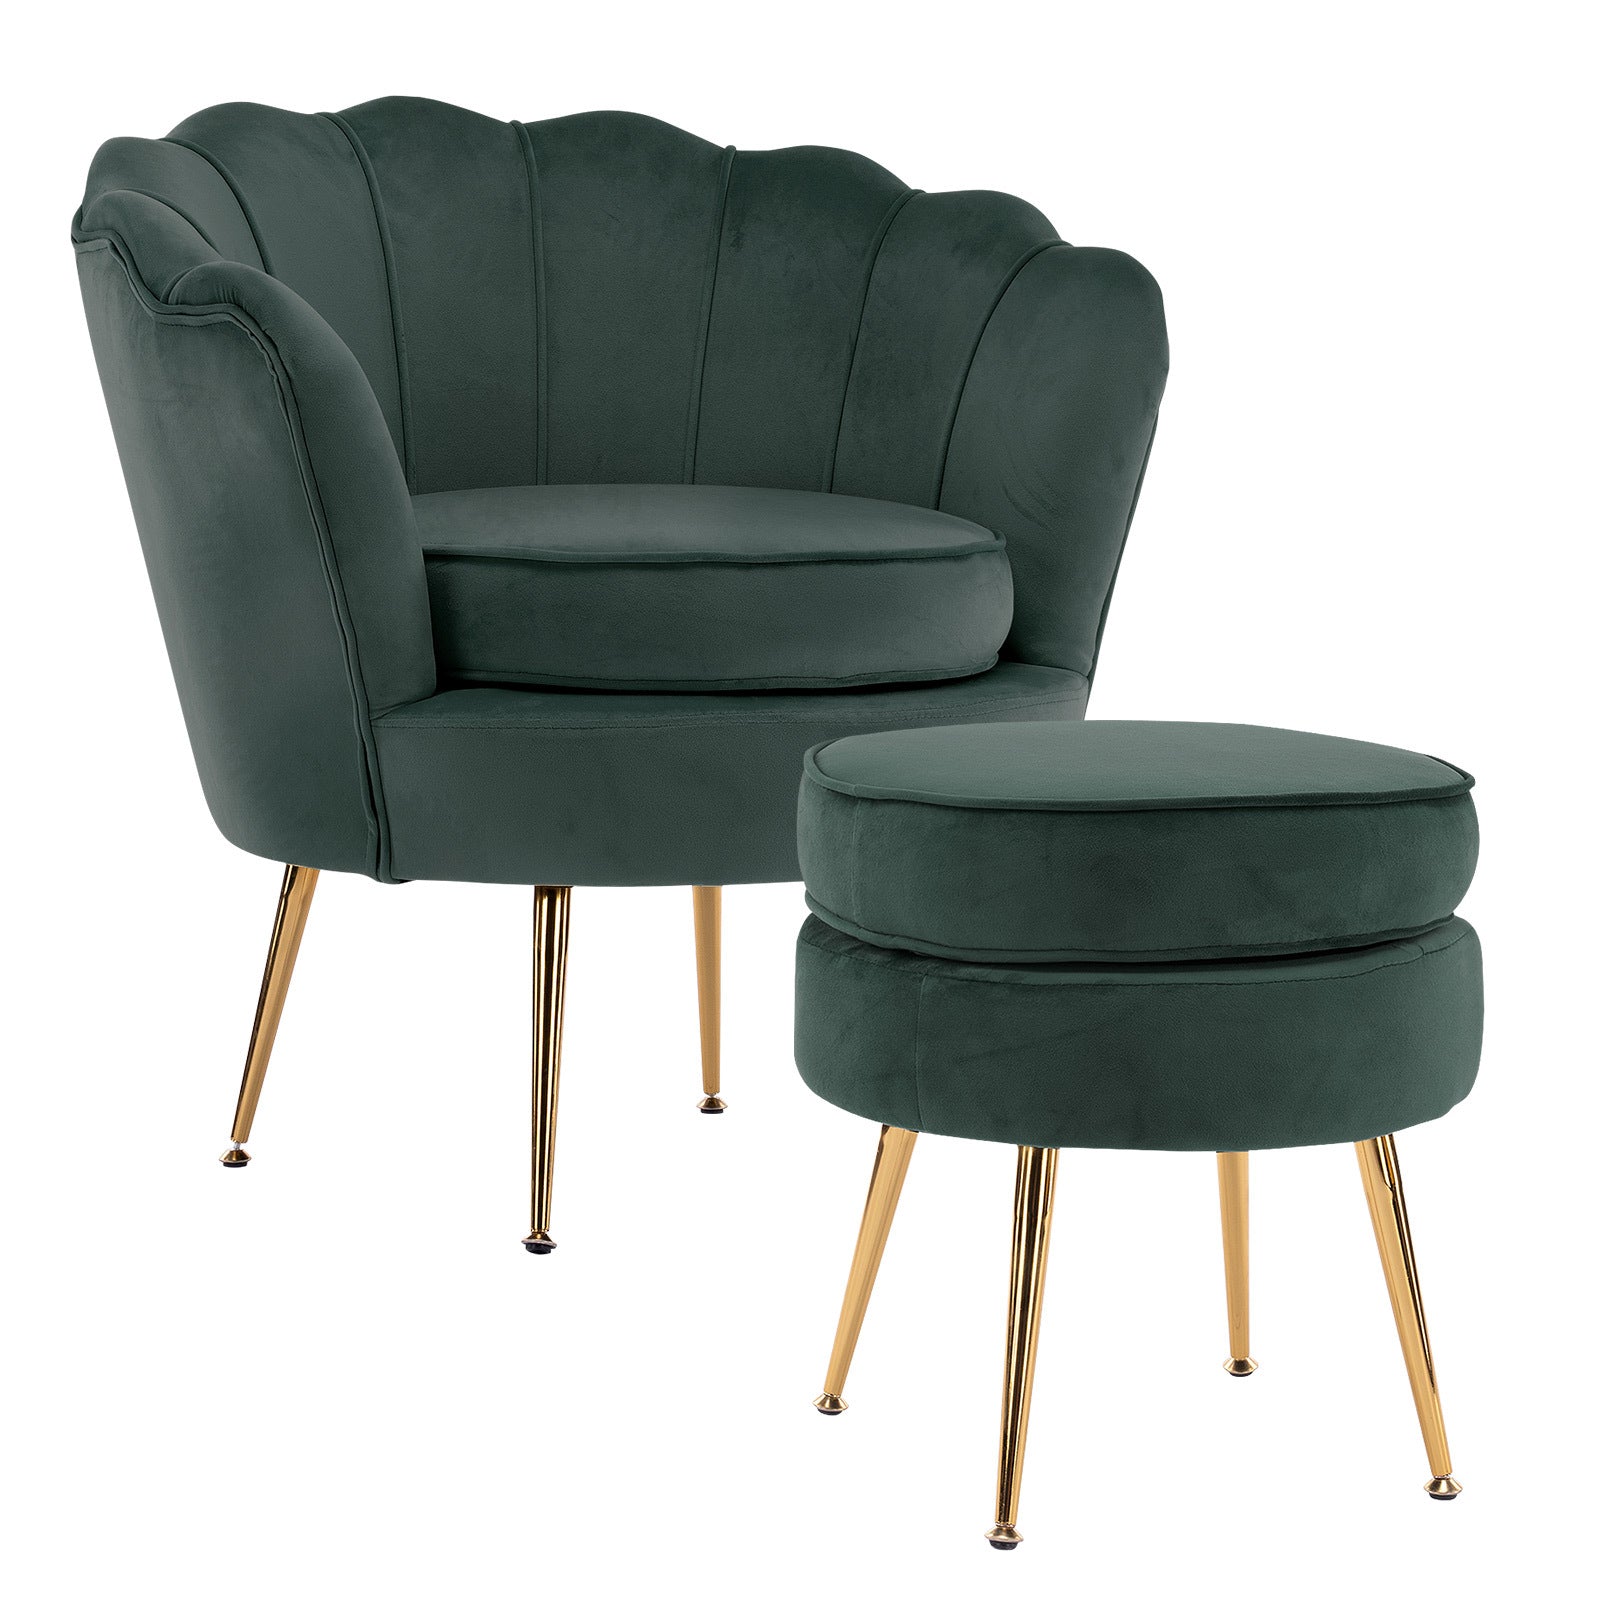 La Bella Shell Scallop Green Armchair Accent Chair Velvet + Round Ottoman Footstool - BM House & Garden